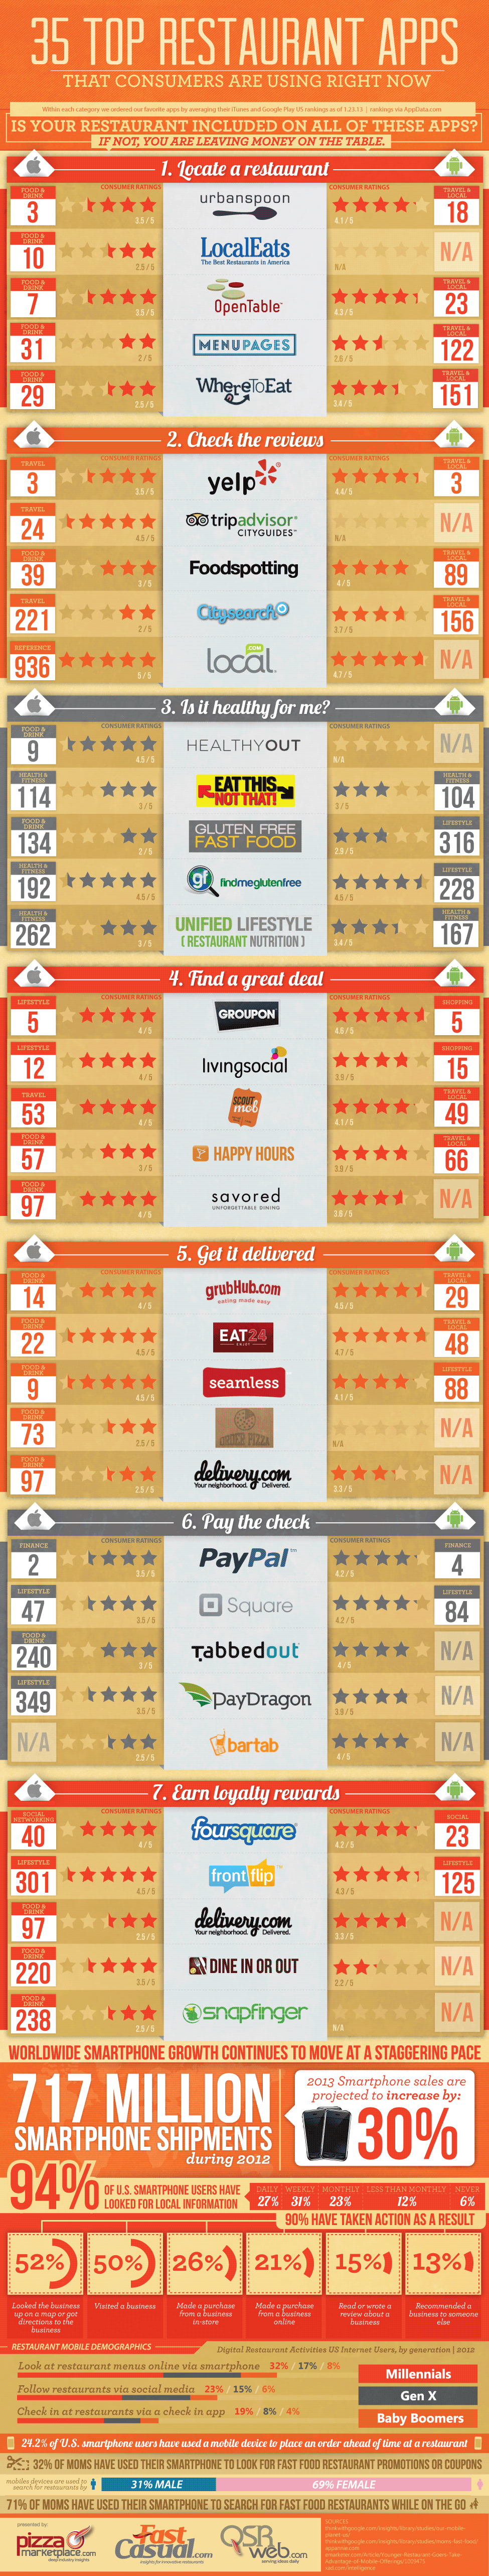 35-Top-Restaurant-Apps-Infographic